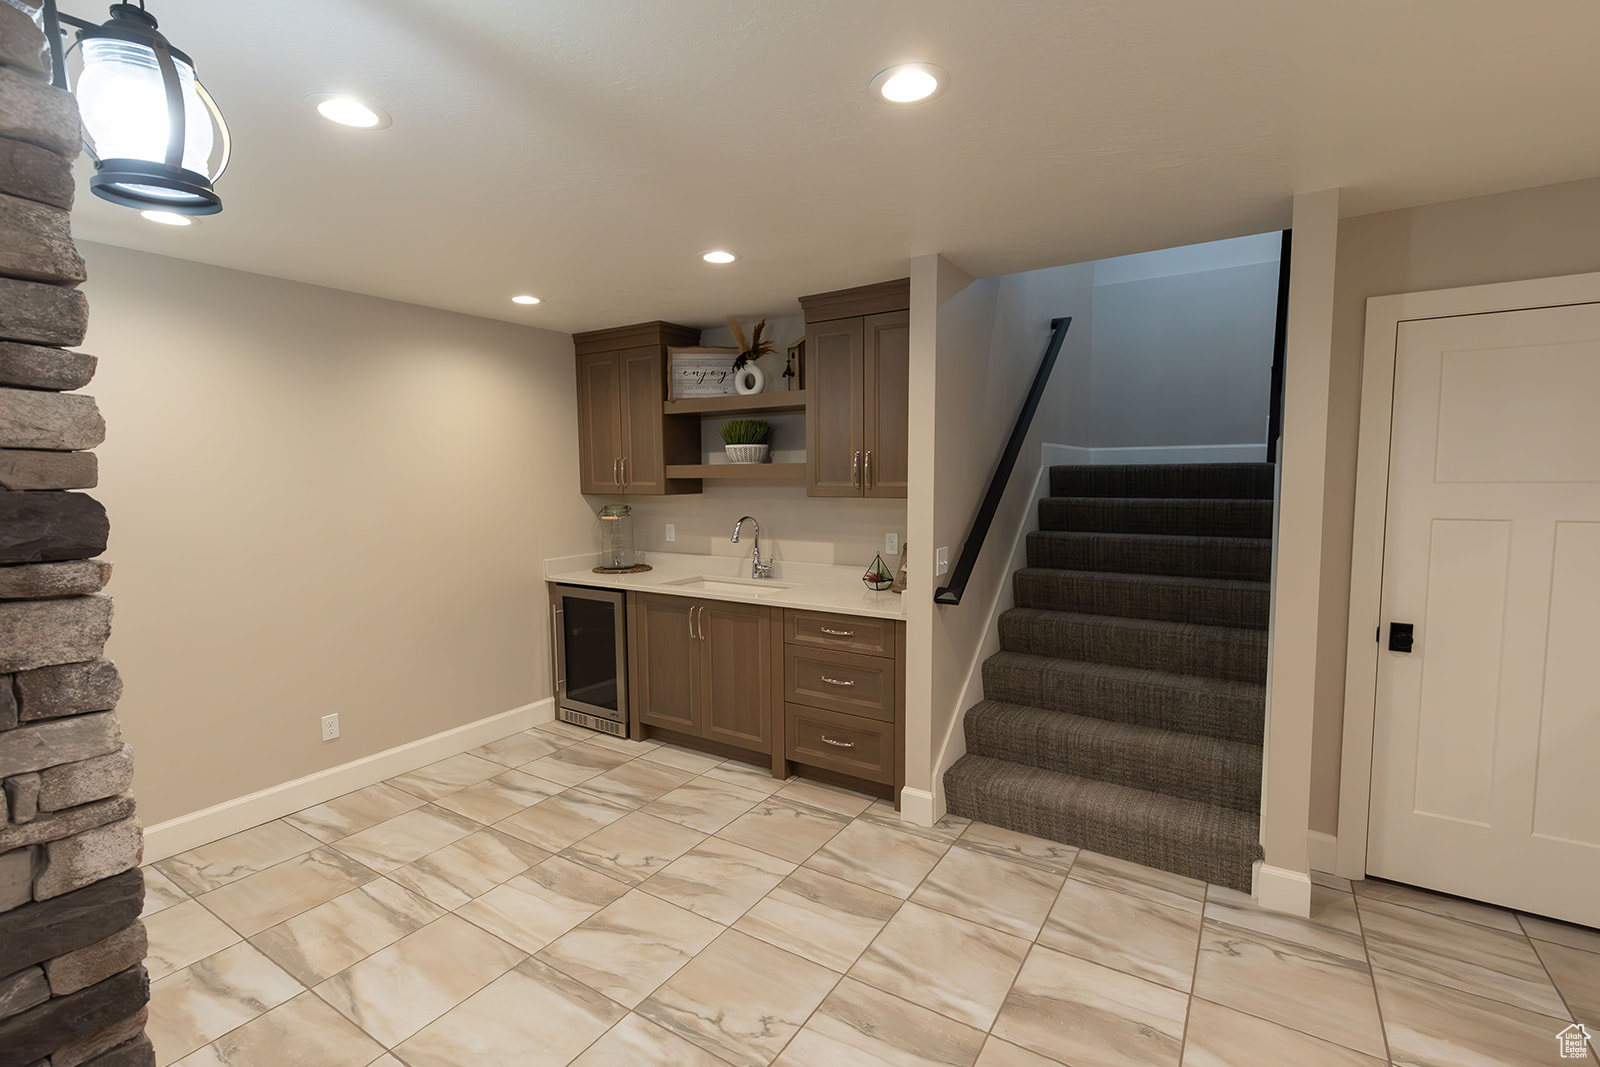 Kitchen with dark brown cabinetry, beverage cooler, light tile floors, and sink